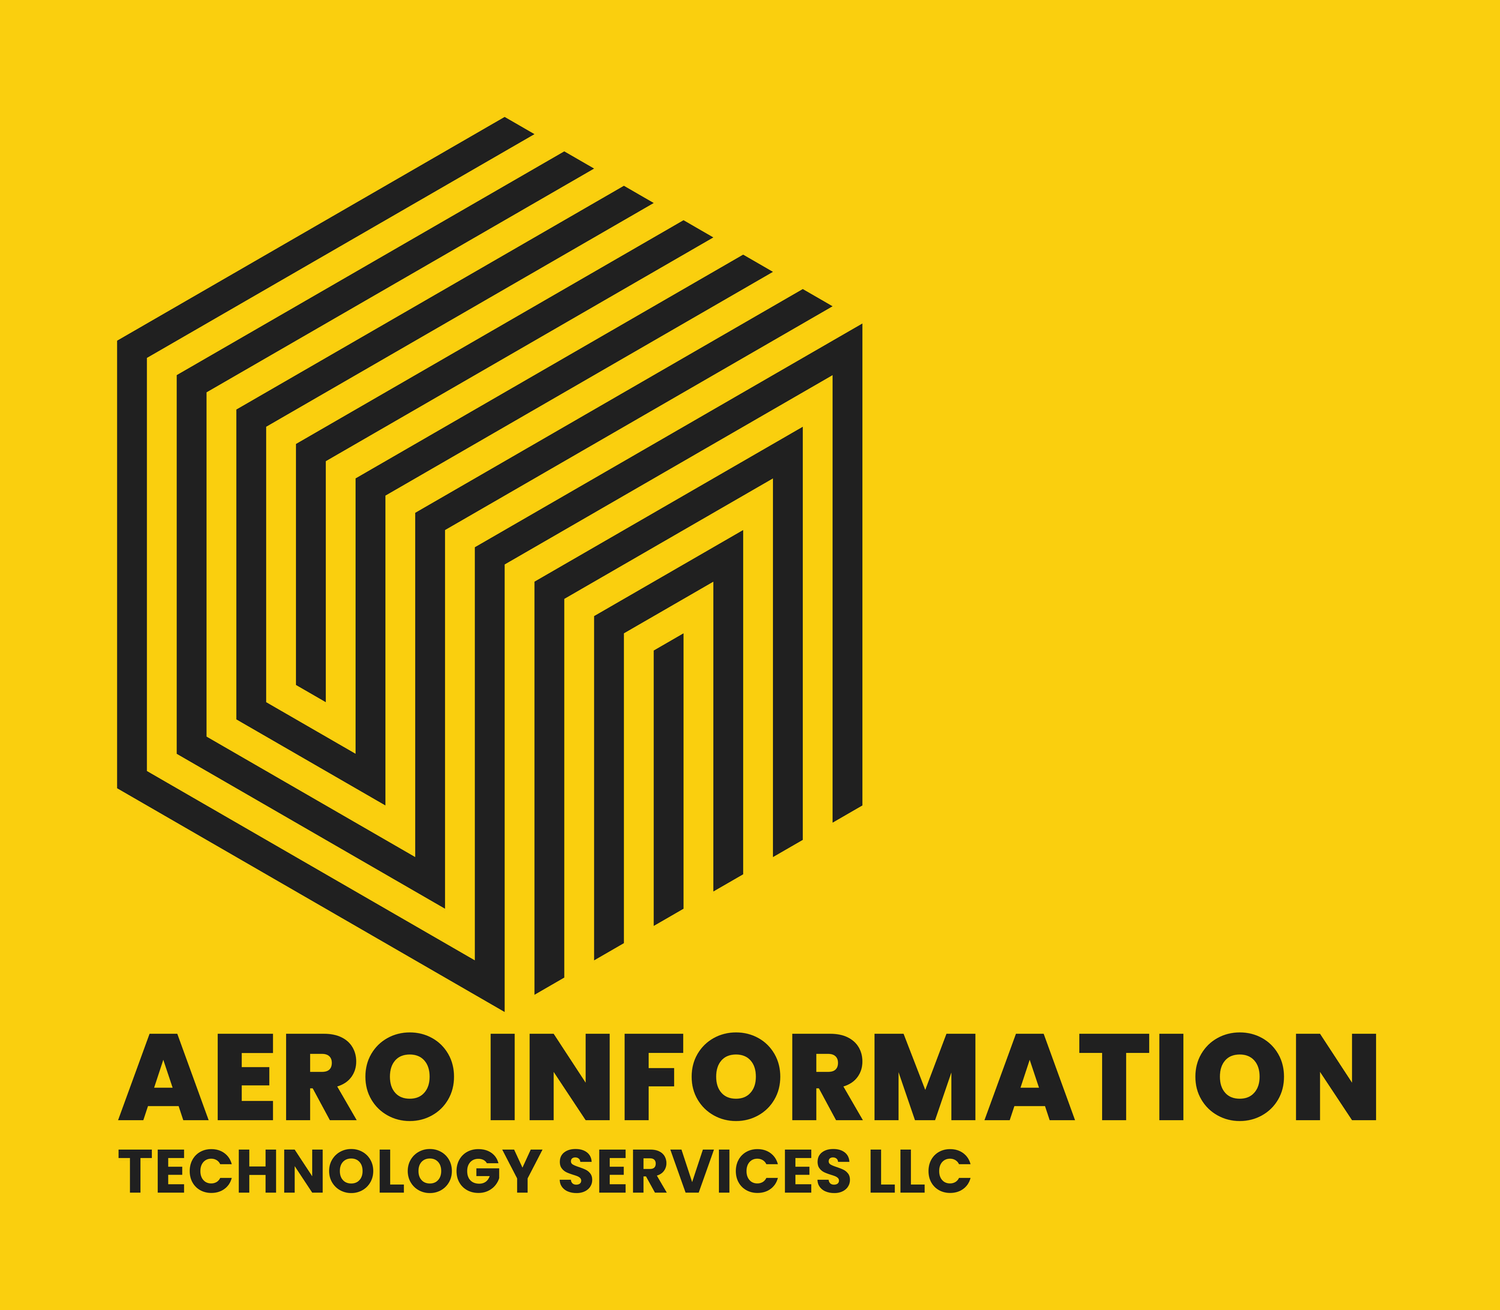 Aero Information Technology Services